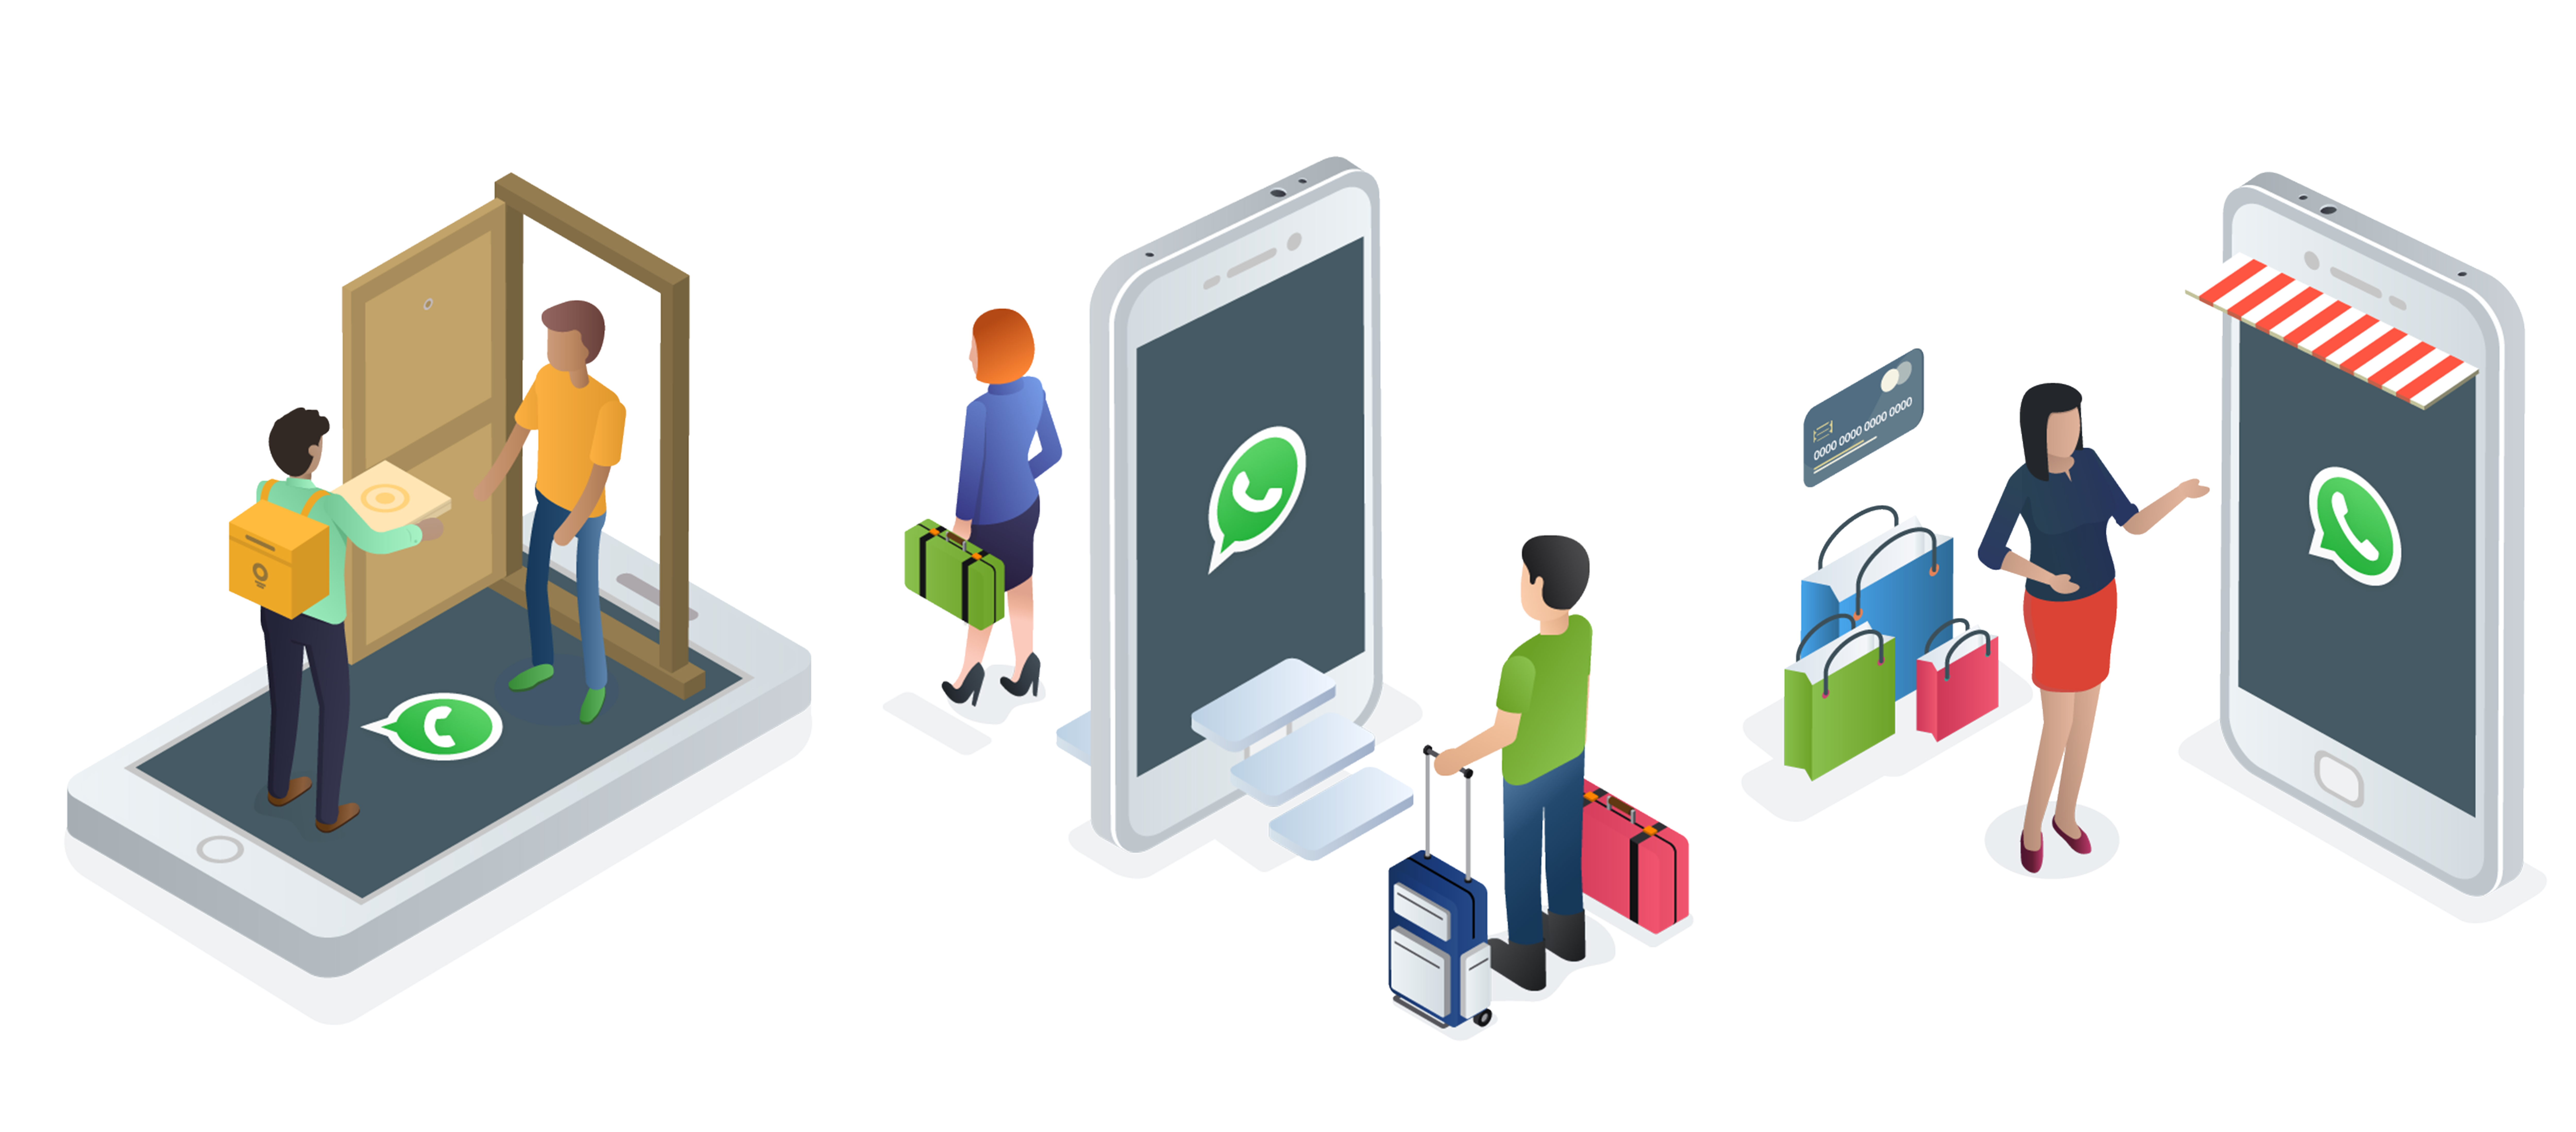 Whatsapp use case